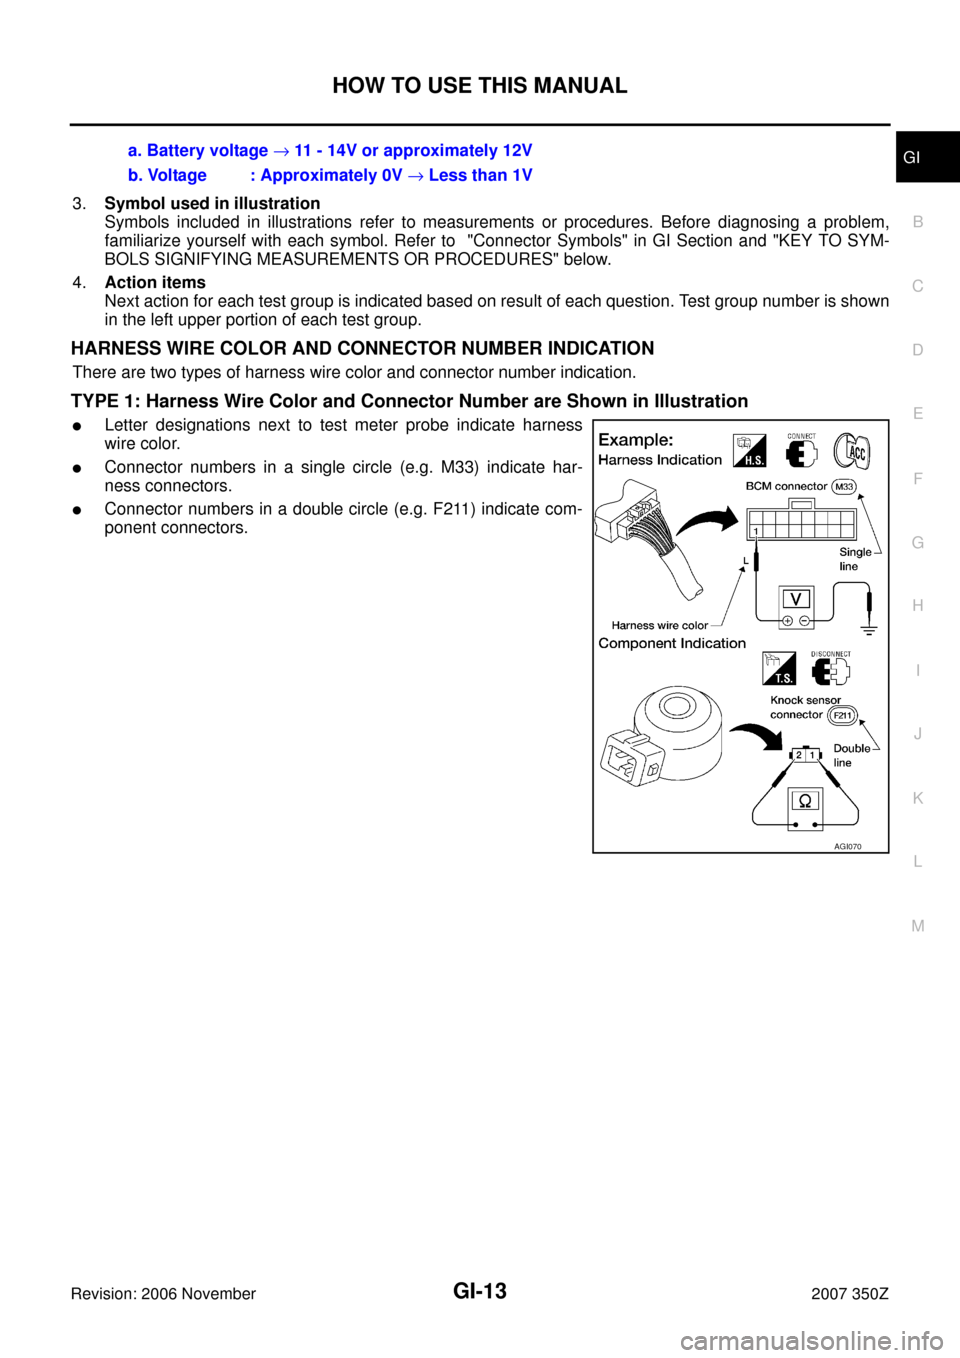 NISSAN 350Z 2007 Z33 General Information User Guide HOW TO USE THIS MANUAL
GI-13
C
D
E
F
G
H
I
J
K
L
MB
GI
Revision: 2006 November2007 350Z
3.Symbol used in illustration
Symbols included in illustrations refer to measurements or procedures. Before diag